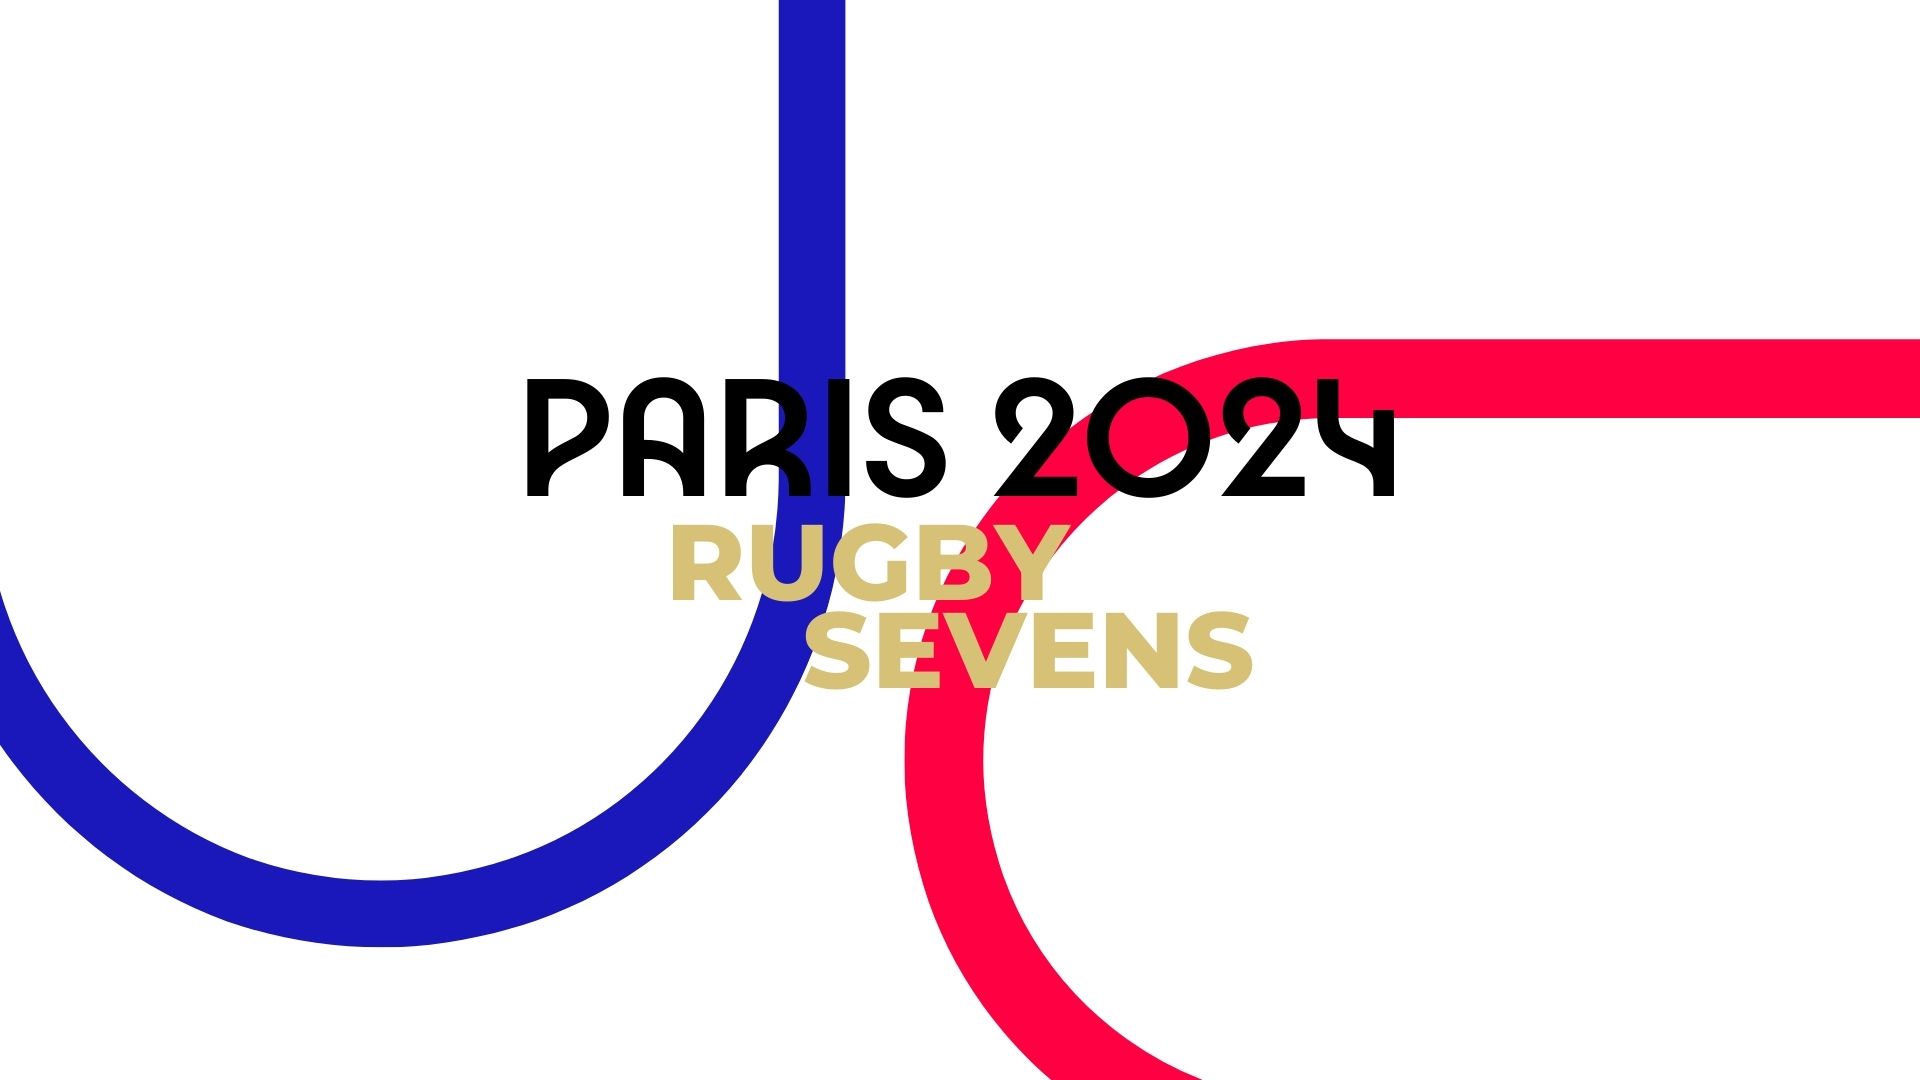 Paris 2024 Rugby Sevens